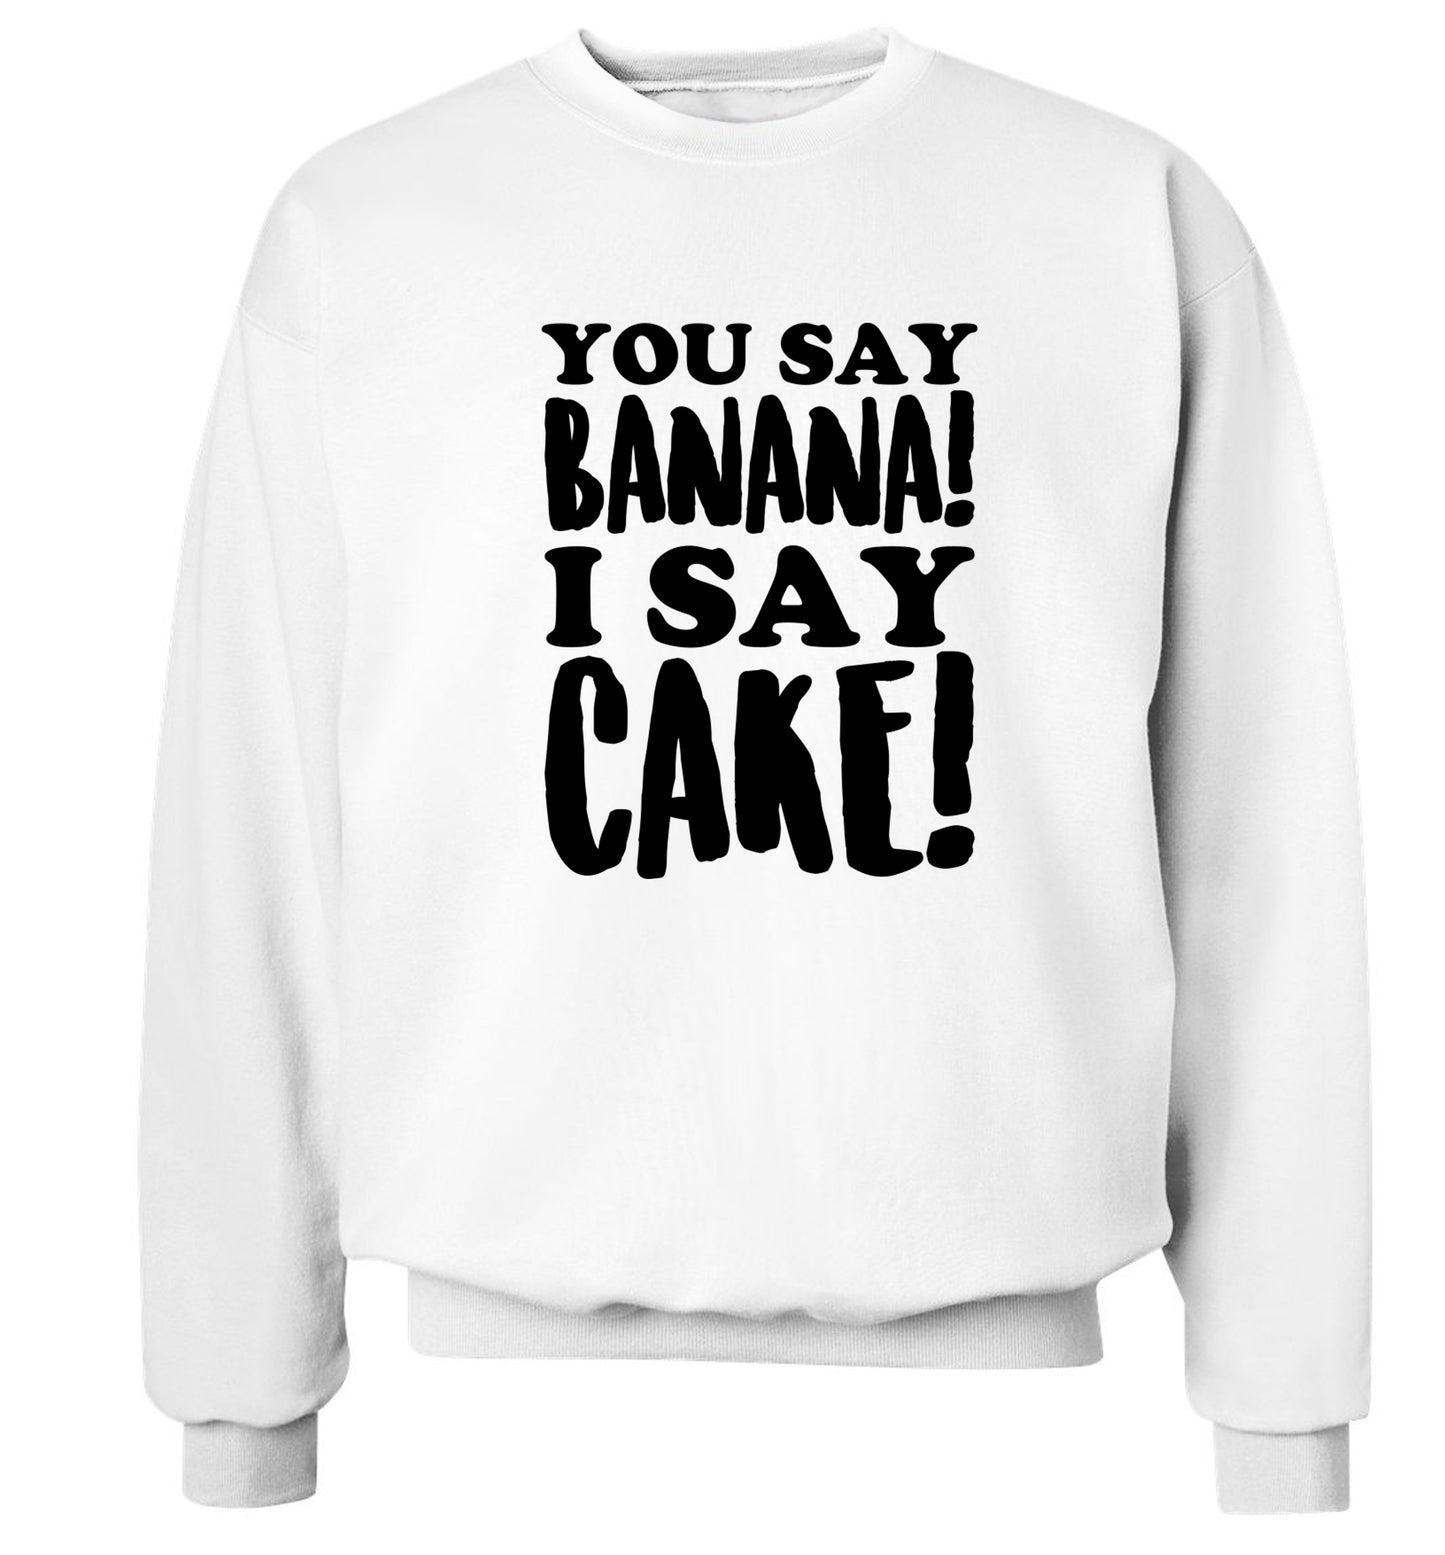 You say banana I say cake! Adult's unisex white Sweater 2XL